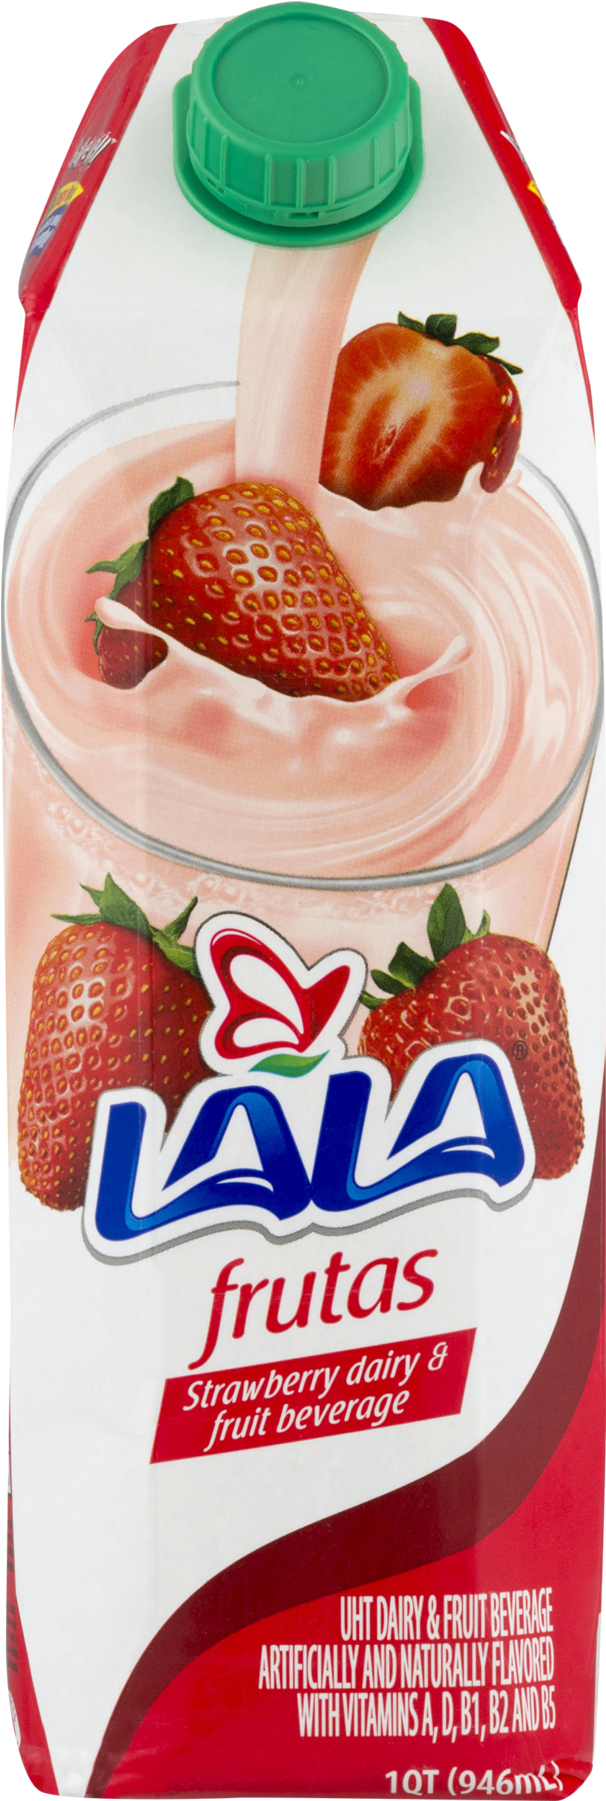 Lala Frutas Strawberry Dairy And Fruit Beverage, - Lala Frutas (1800x1800), Png Download